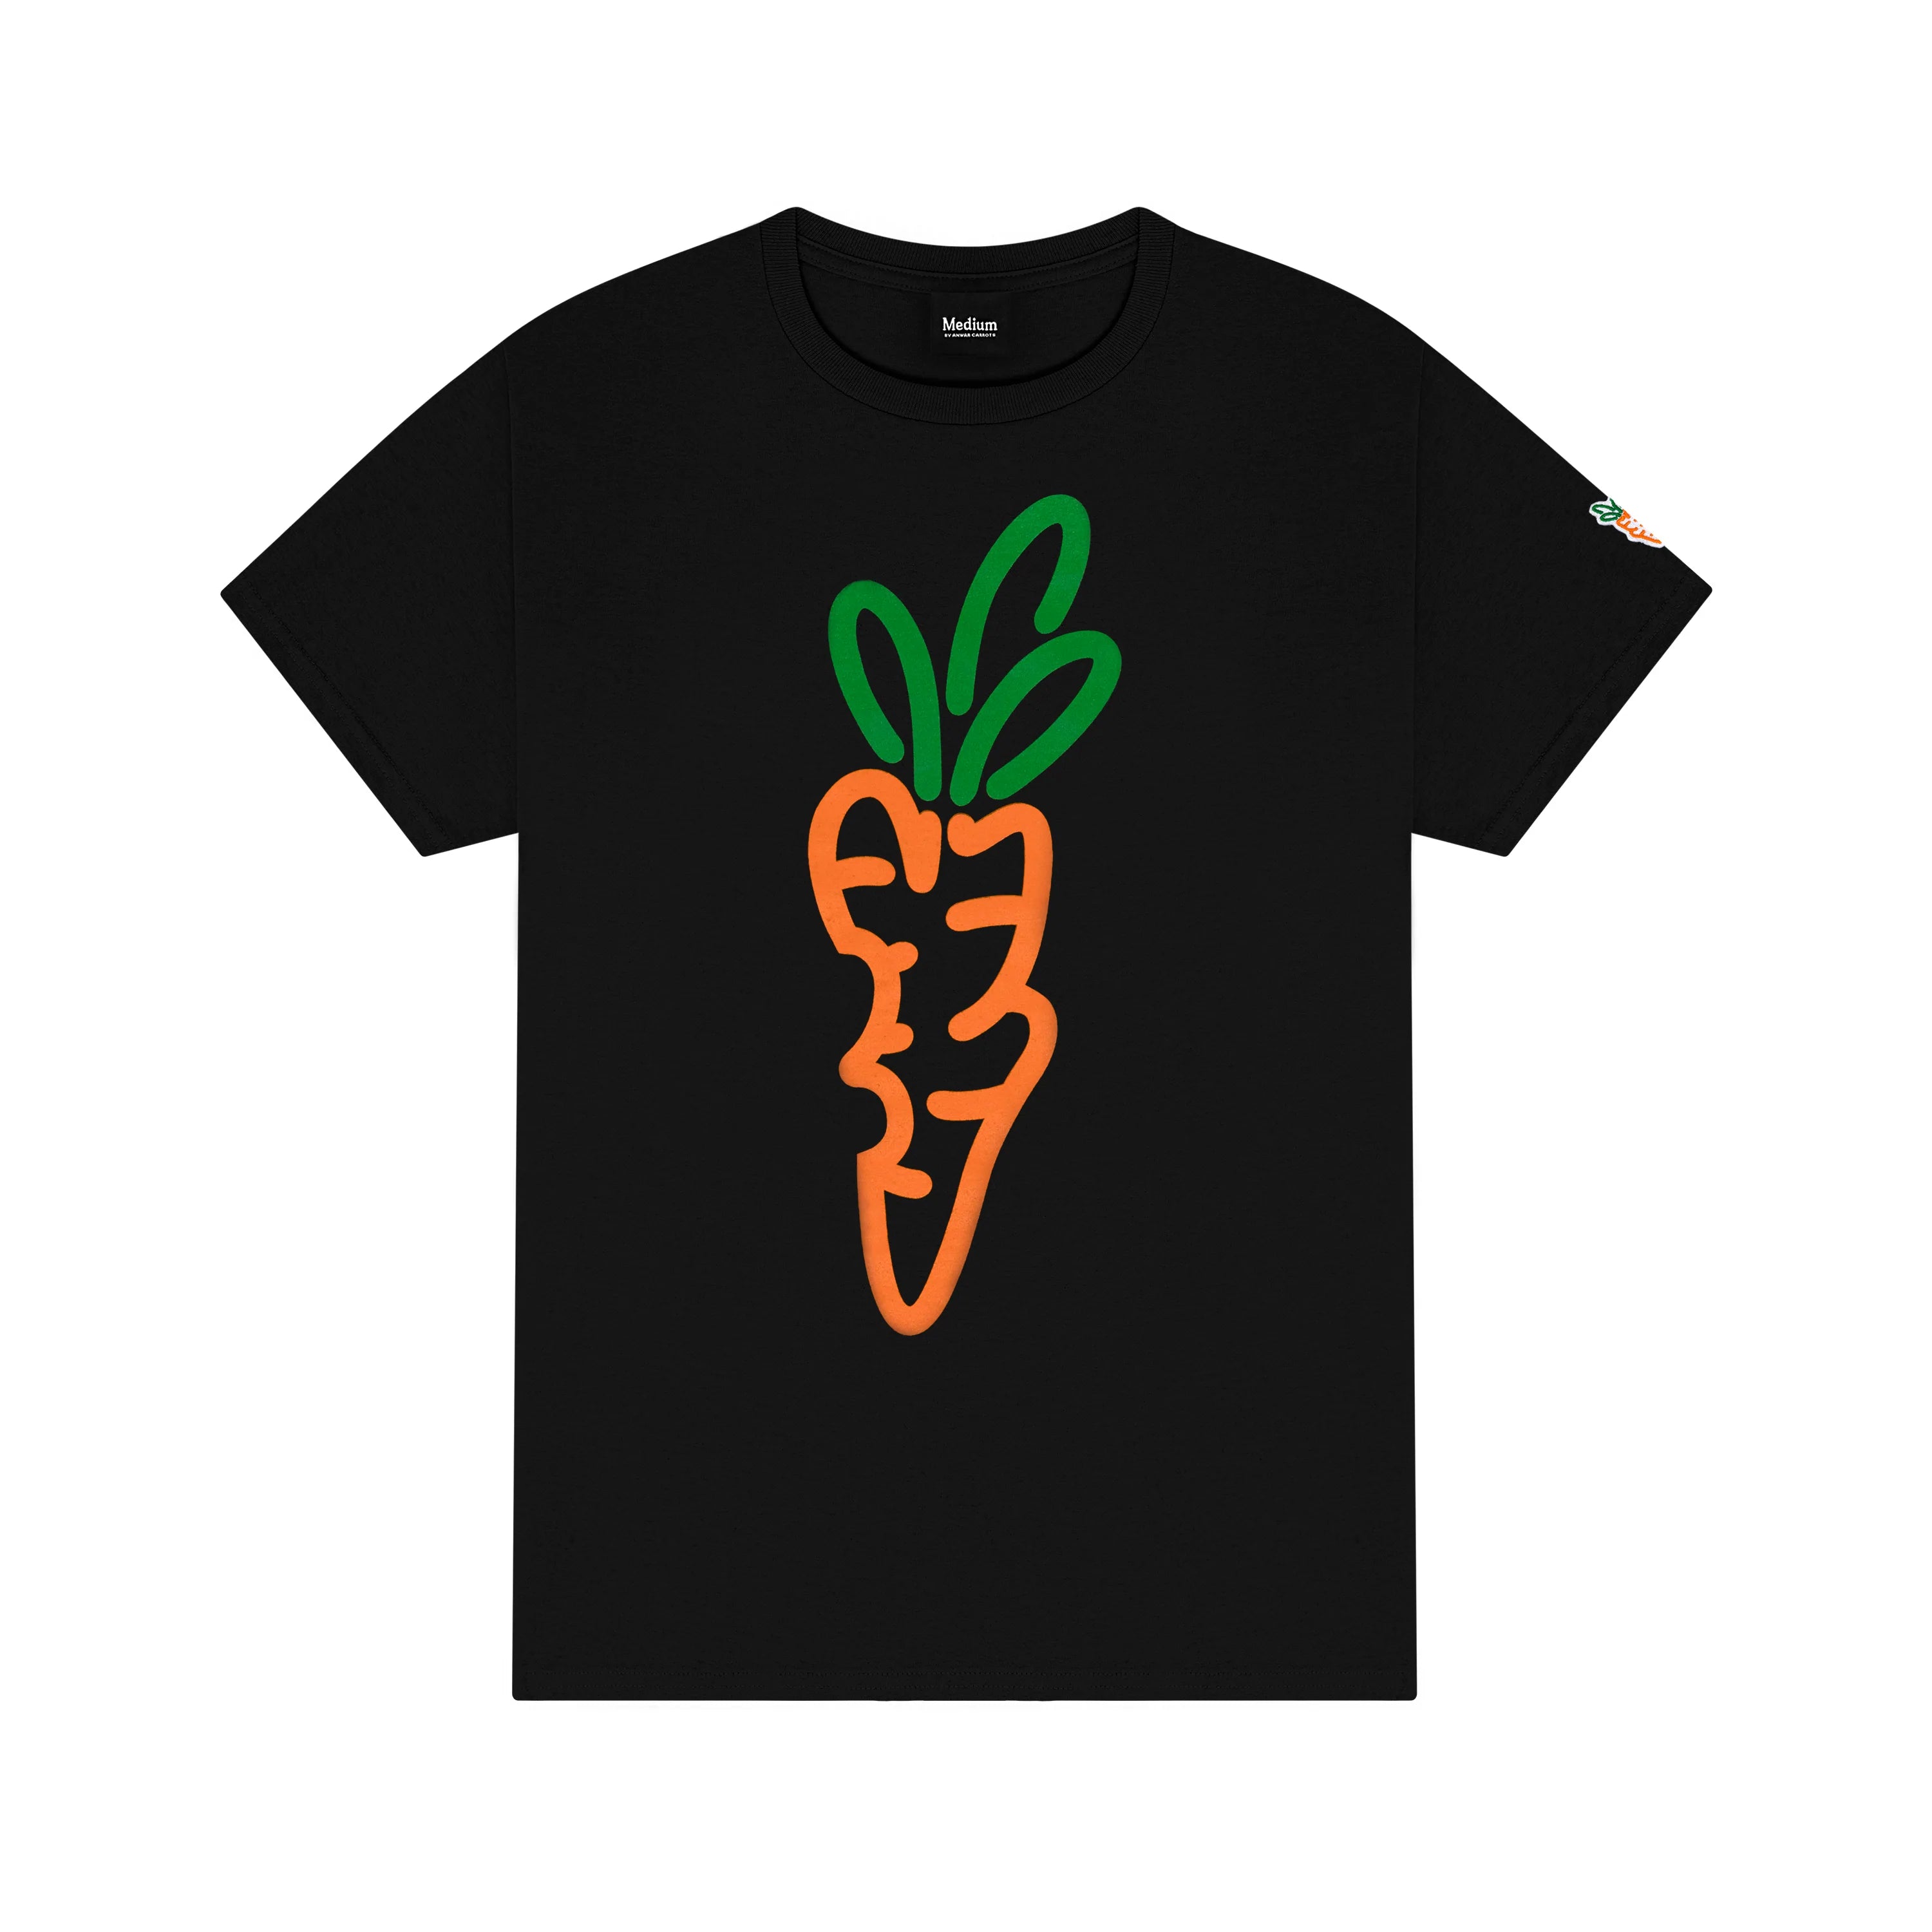 Carrots Signature Carrot Tee - Black